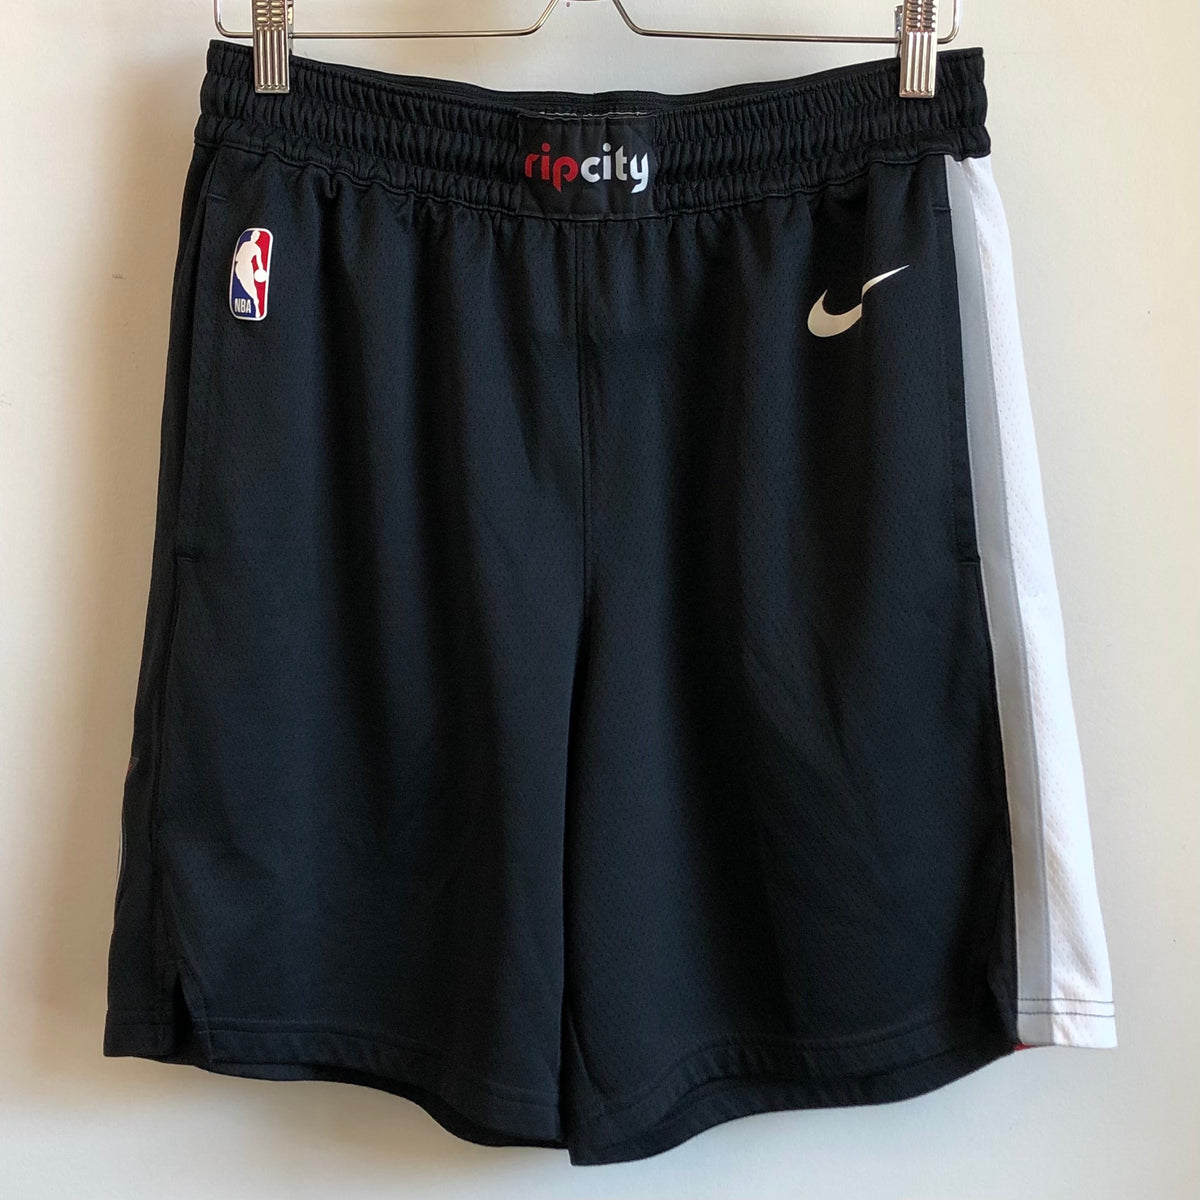 Portland Trail Blazers Nike Authentic Jerseys - Rip City Clothing